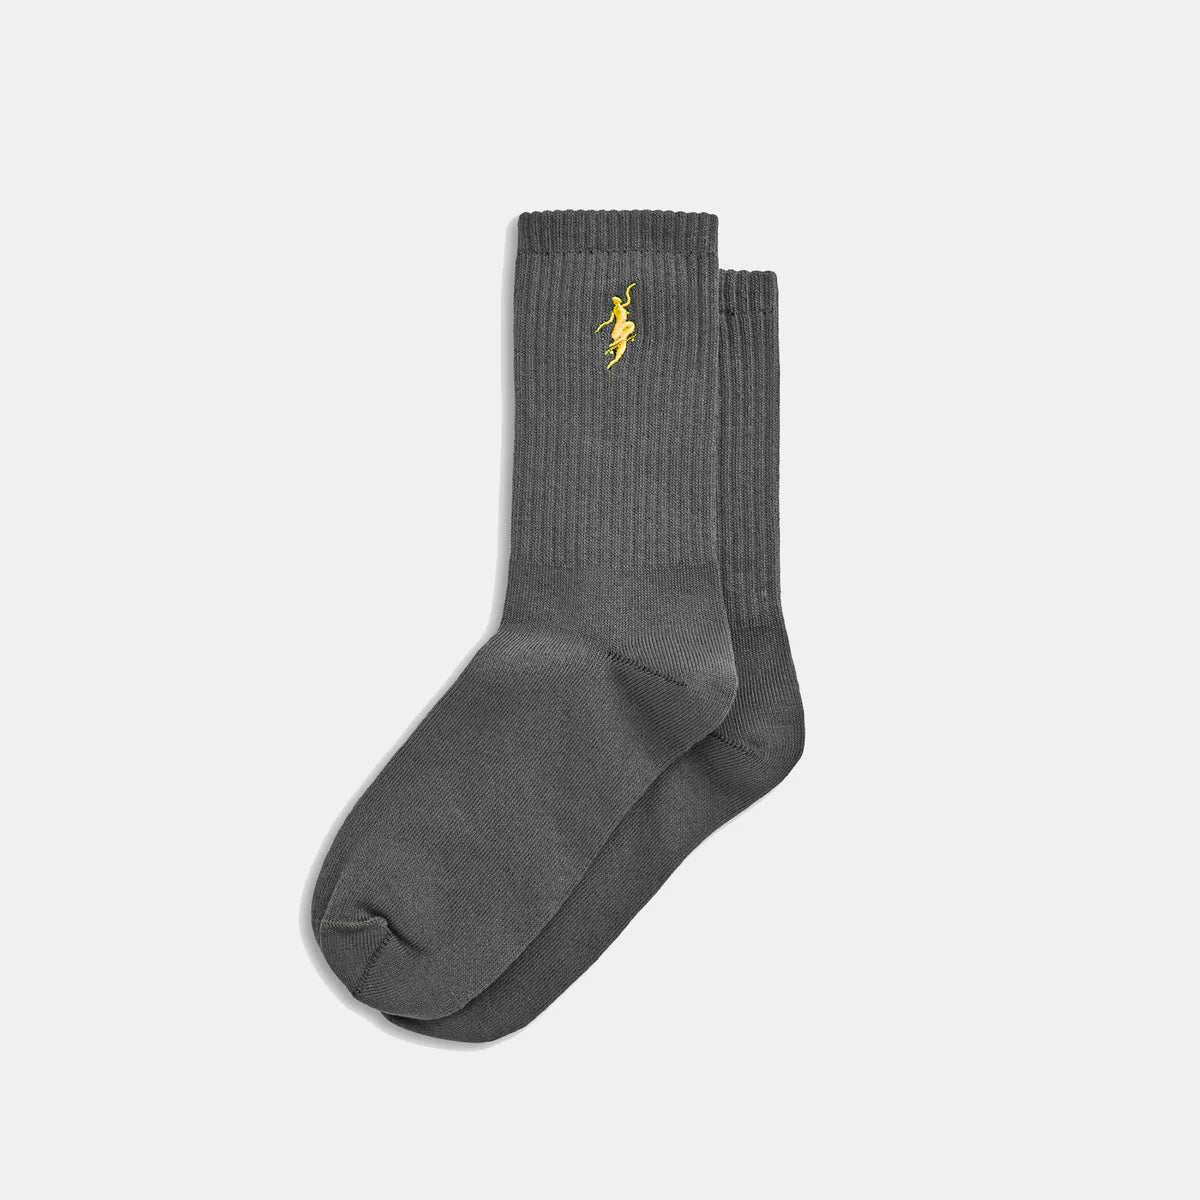 Polar Skate Co No Comply socks graphite yellow